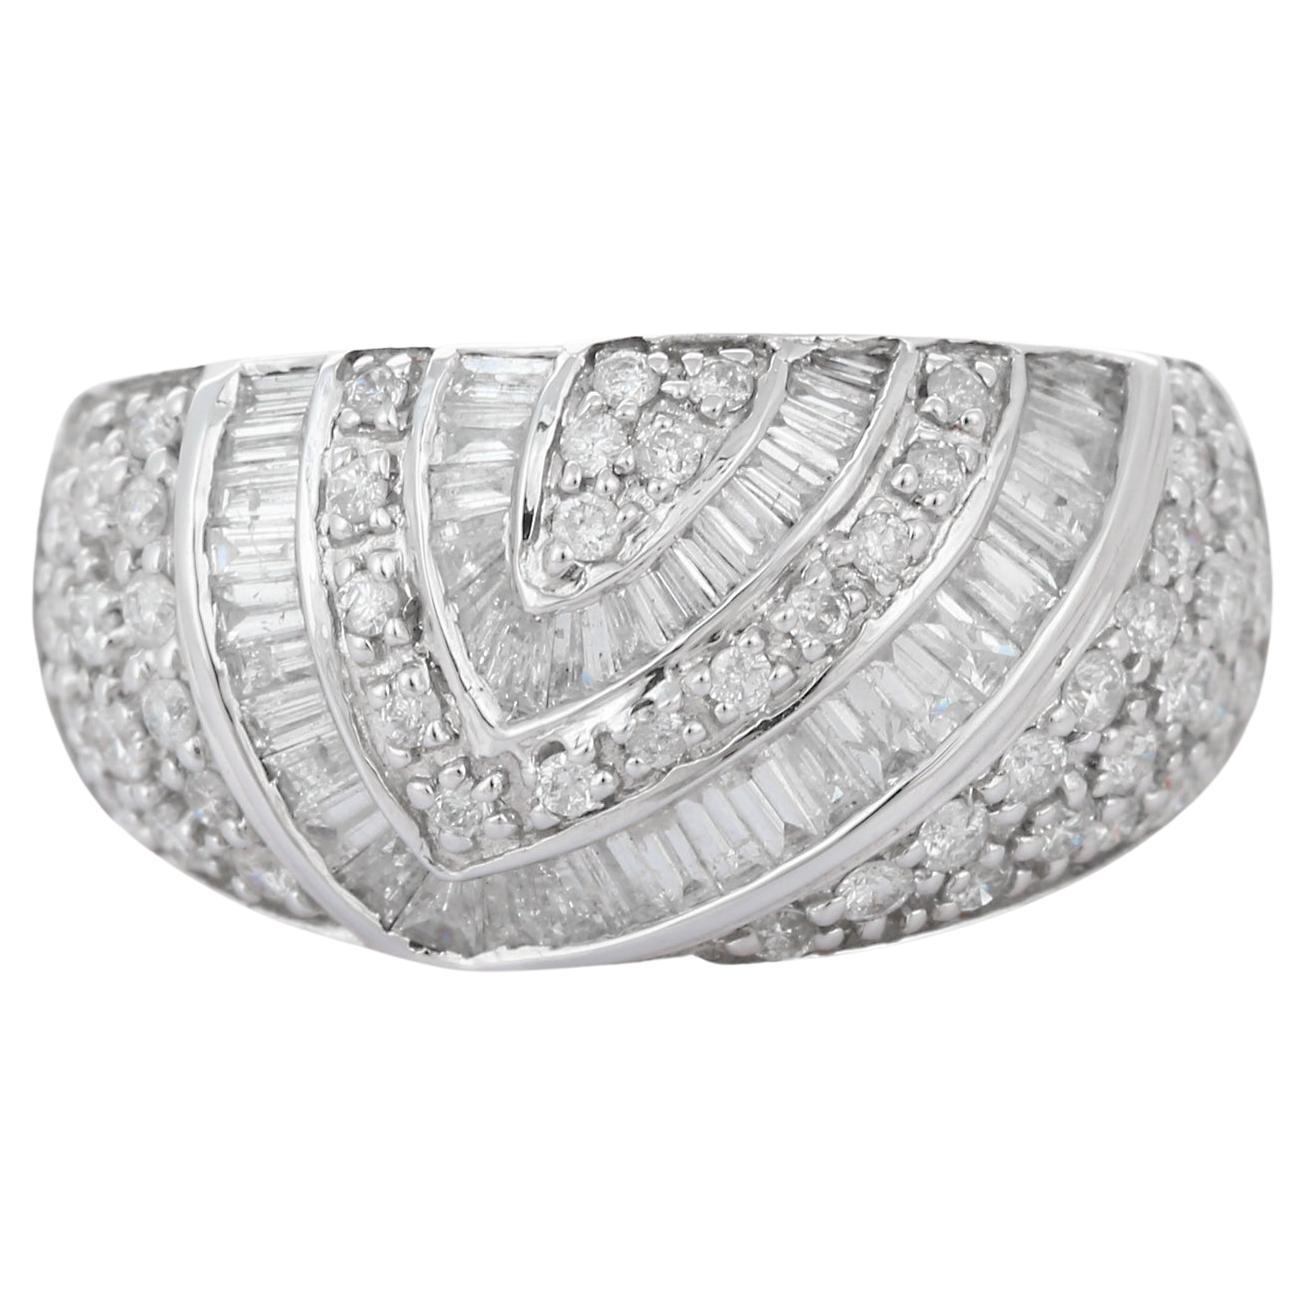 For Sale:  18K White Gold Diamond Cocktail Ring